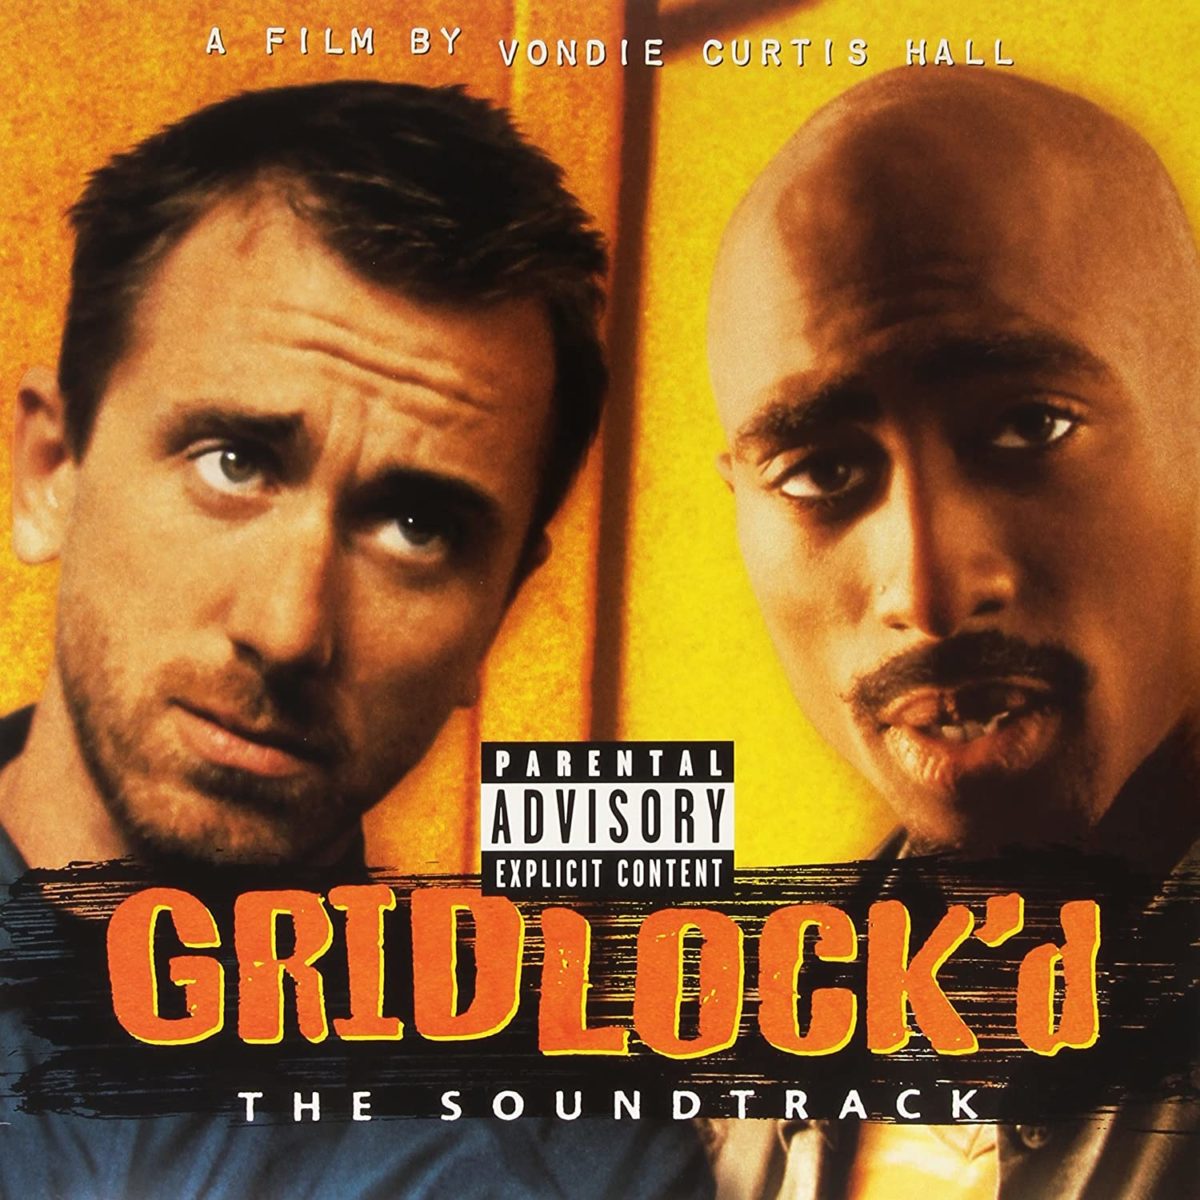 GRIDLOCK'D (1997)